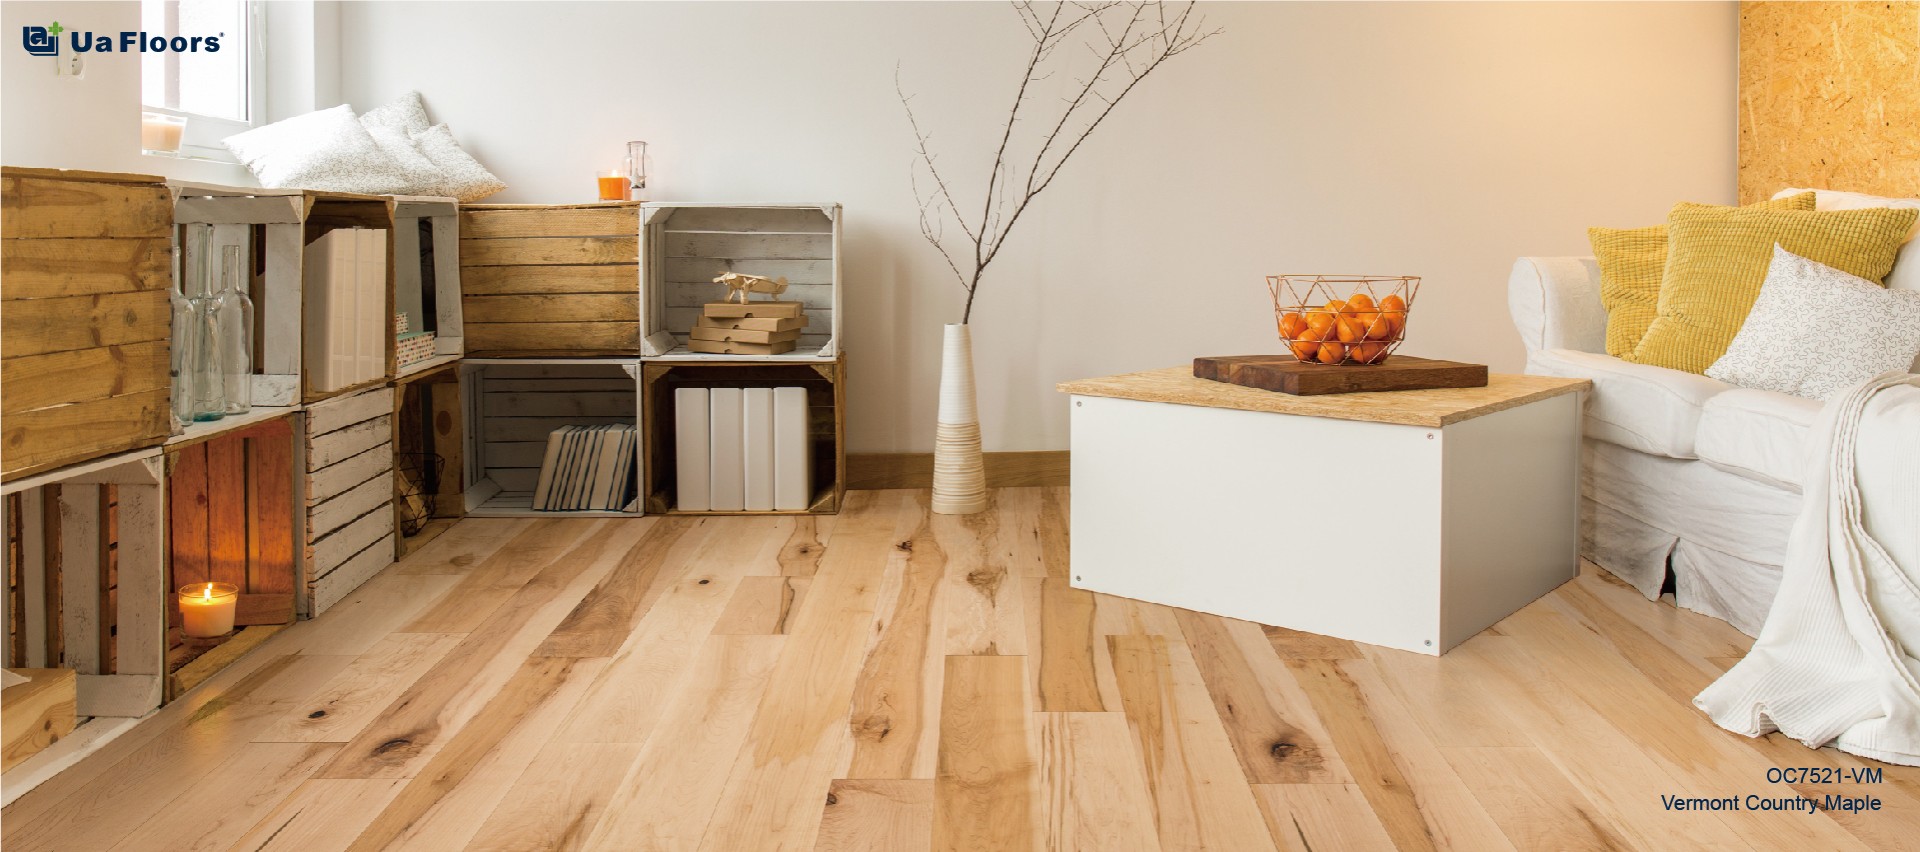 Stylish And Durable Maple Engineered, Durability Of Engineered Hardwood Flooring